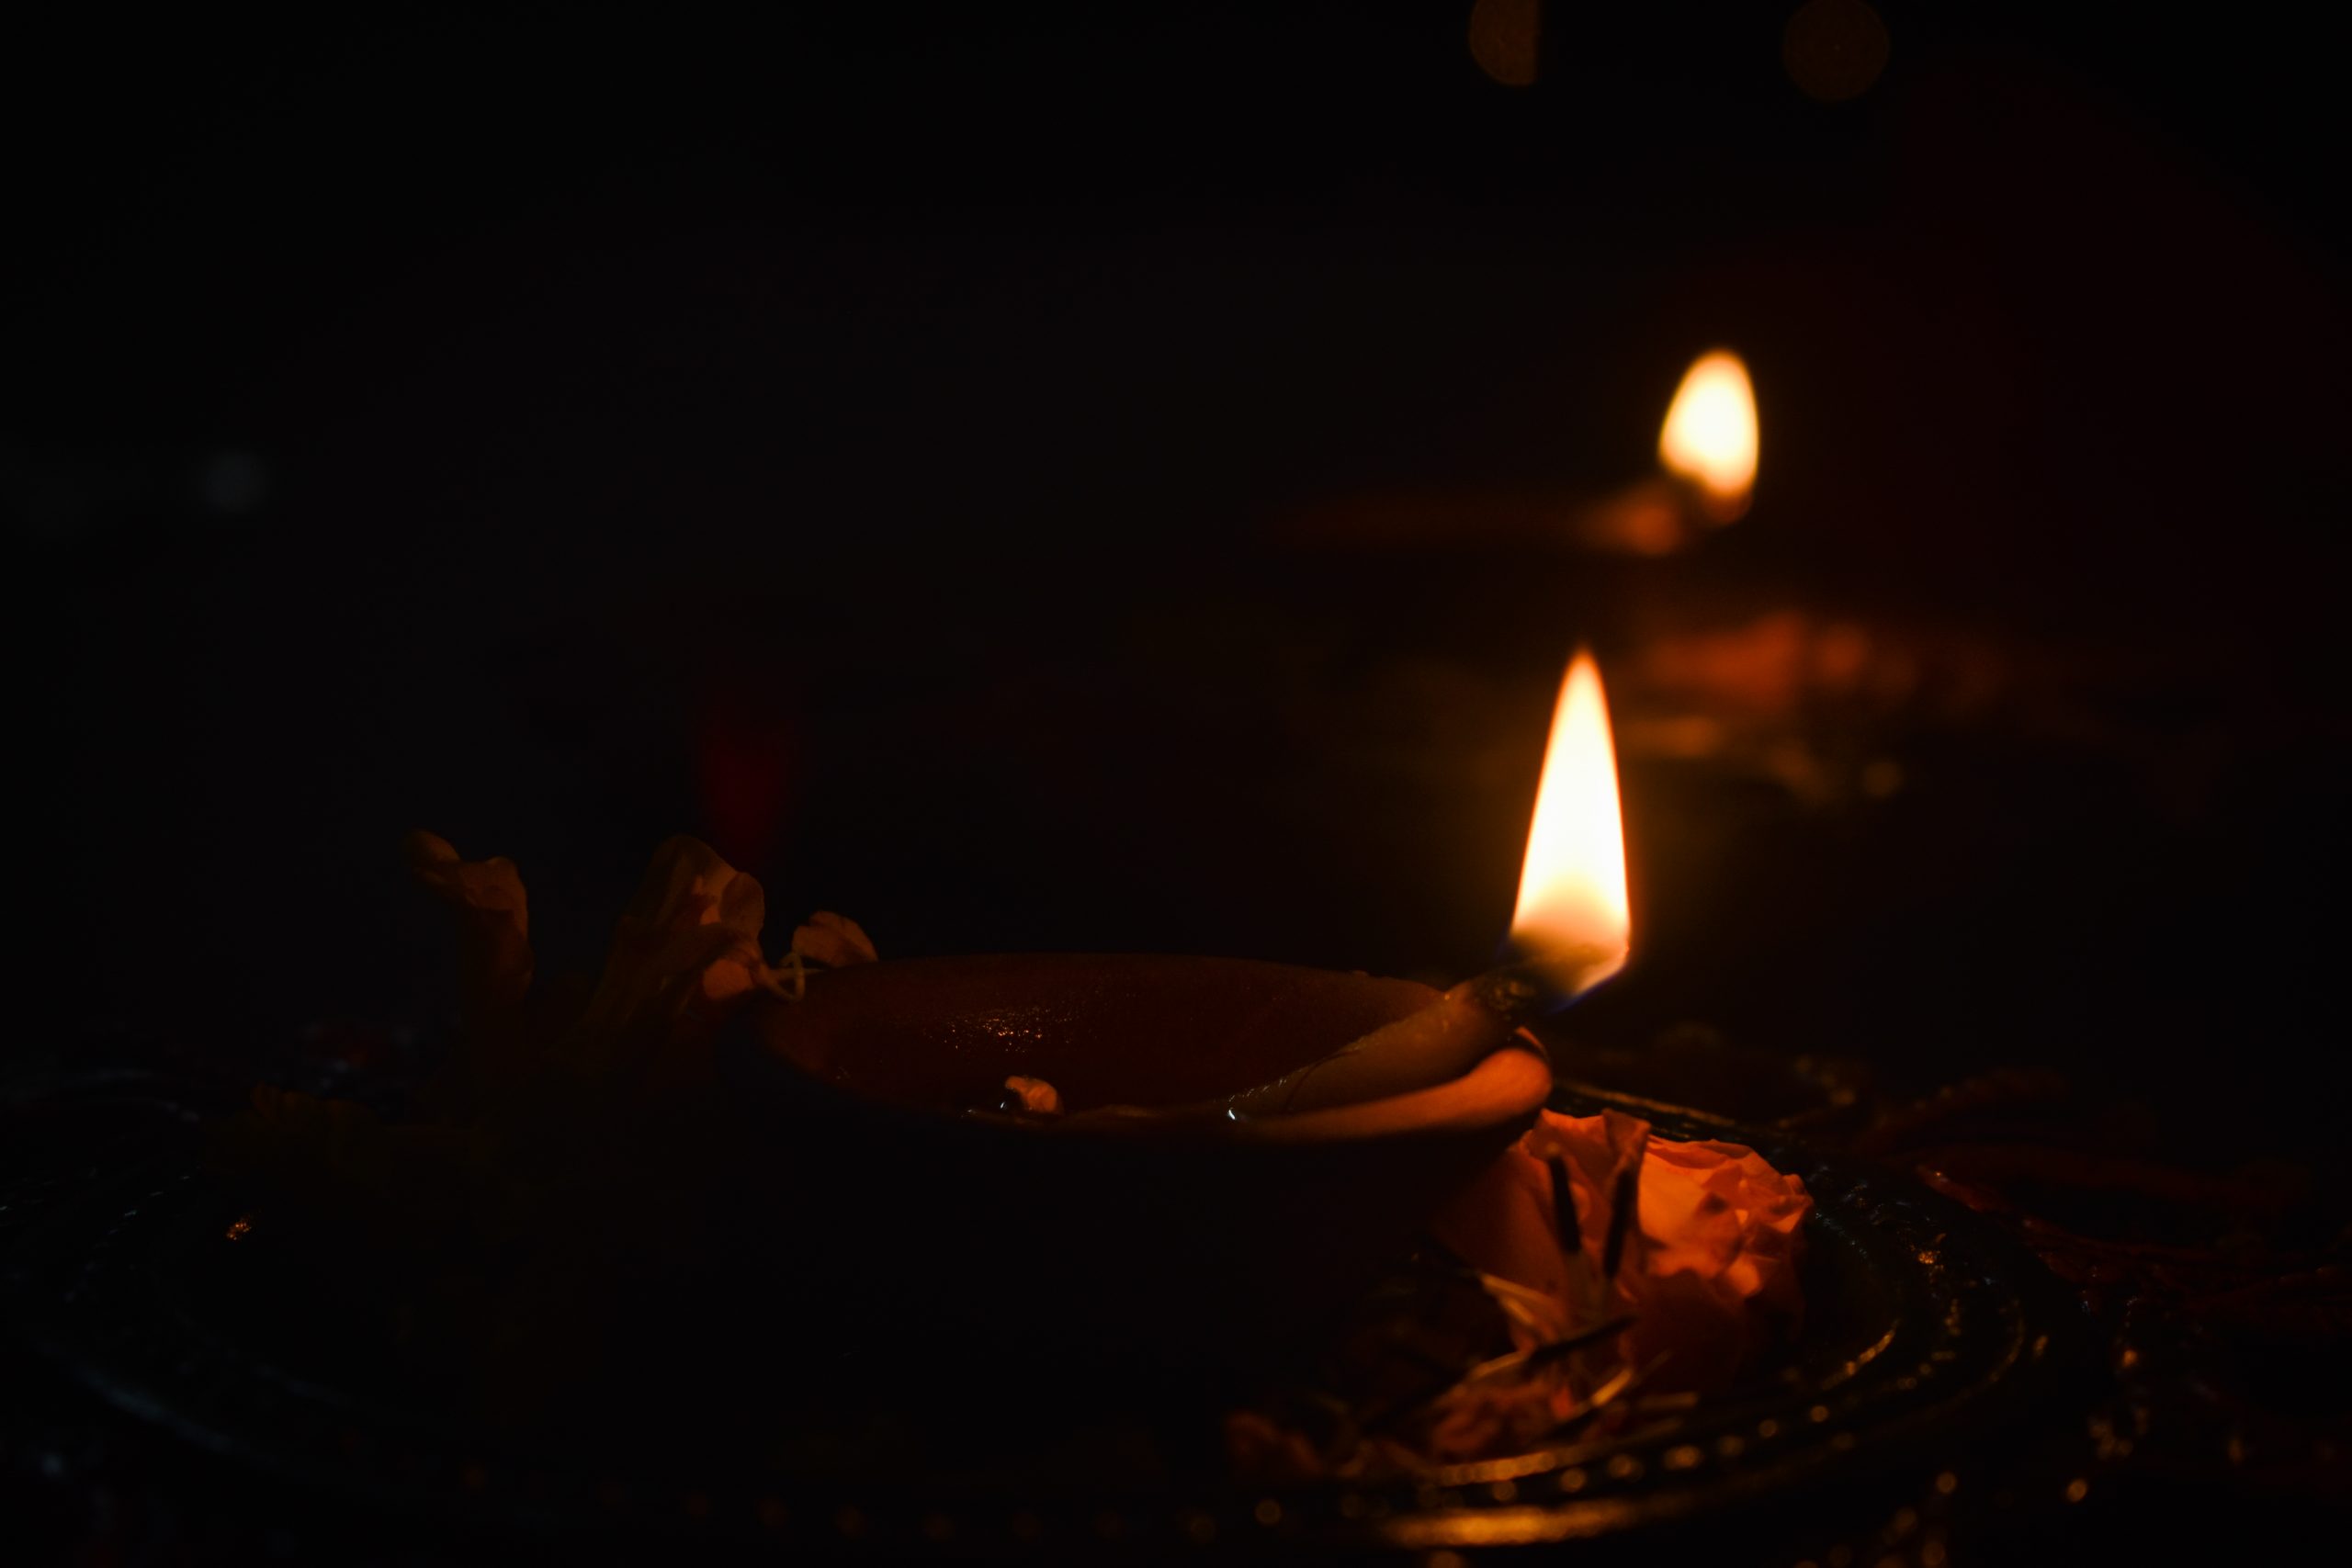 Oil lamps for Diwali